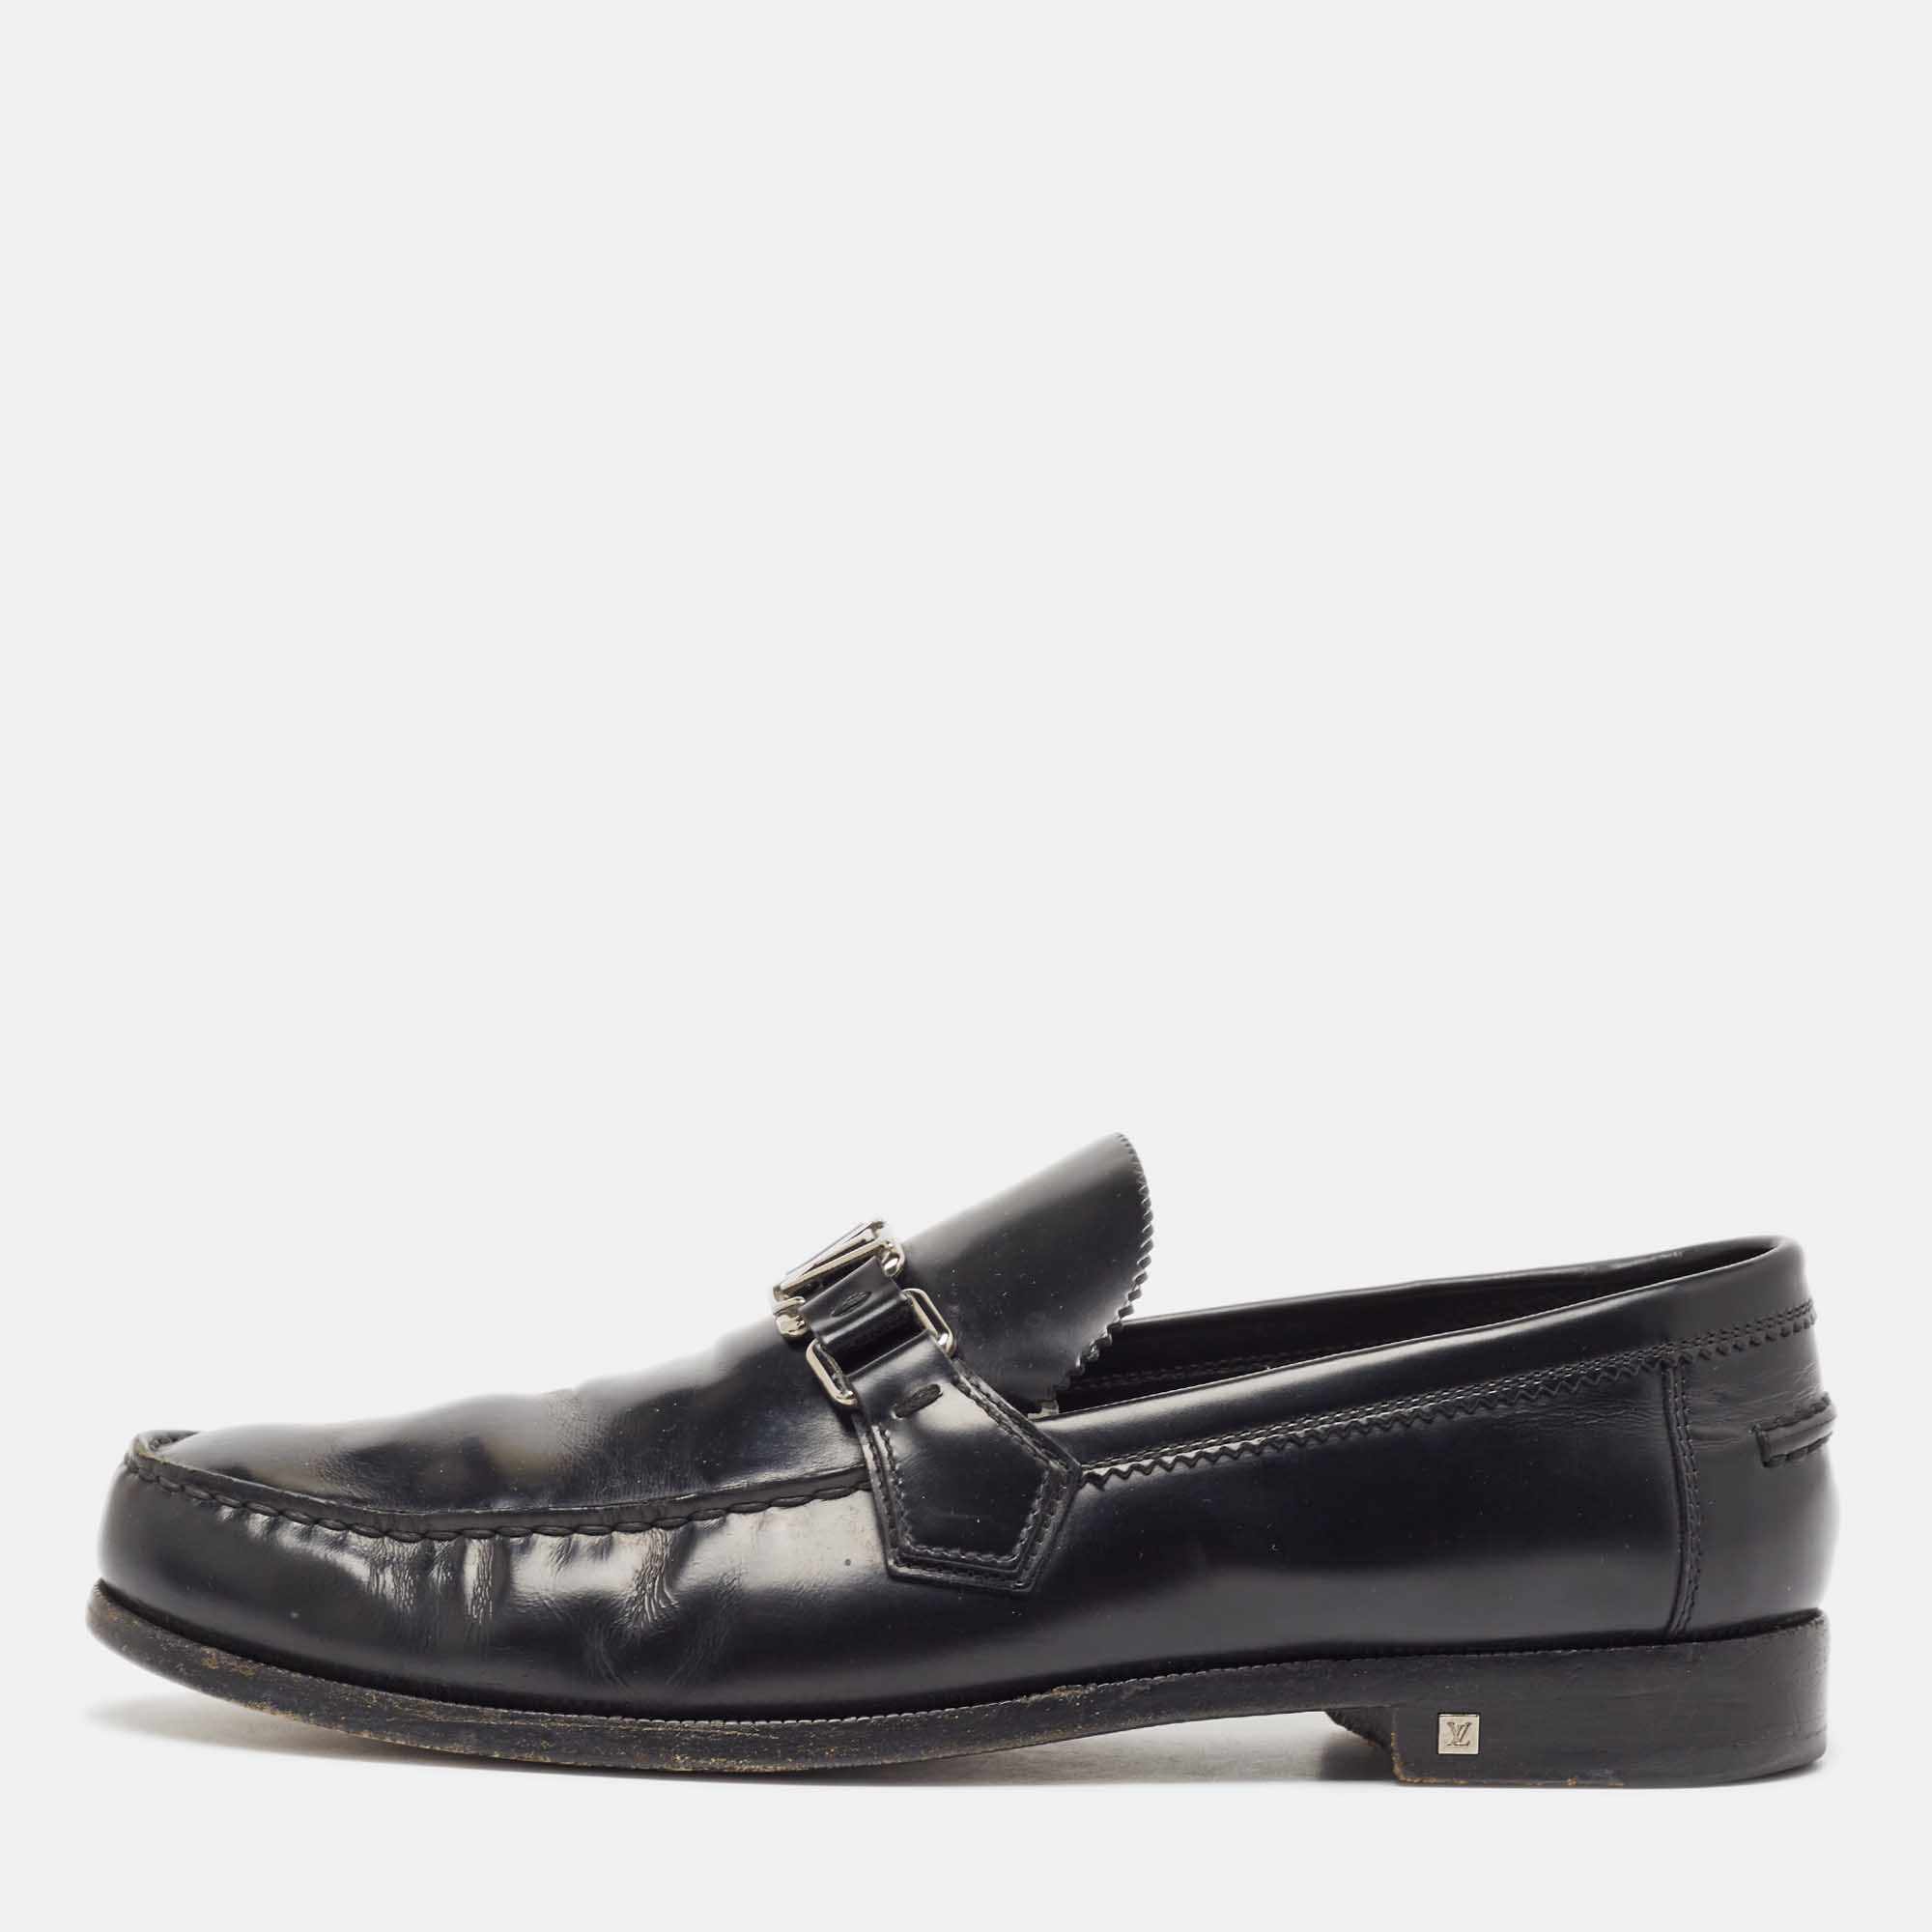 Louis vuitton black leather major loafers size 43